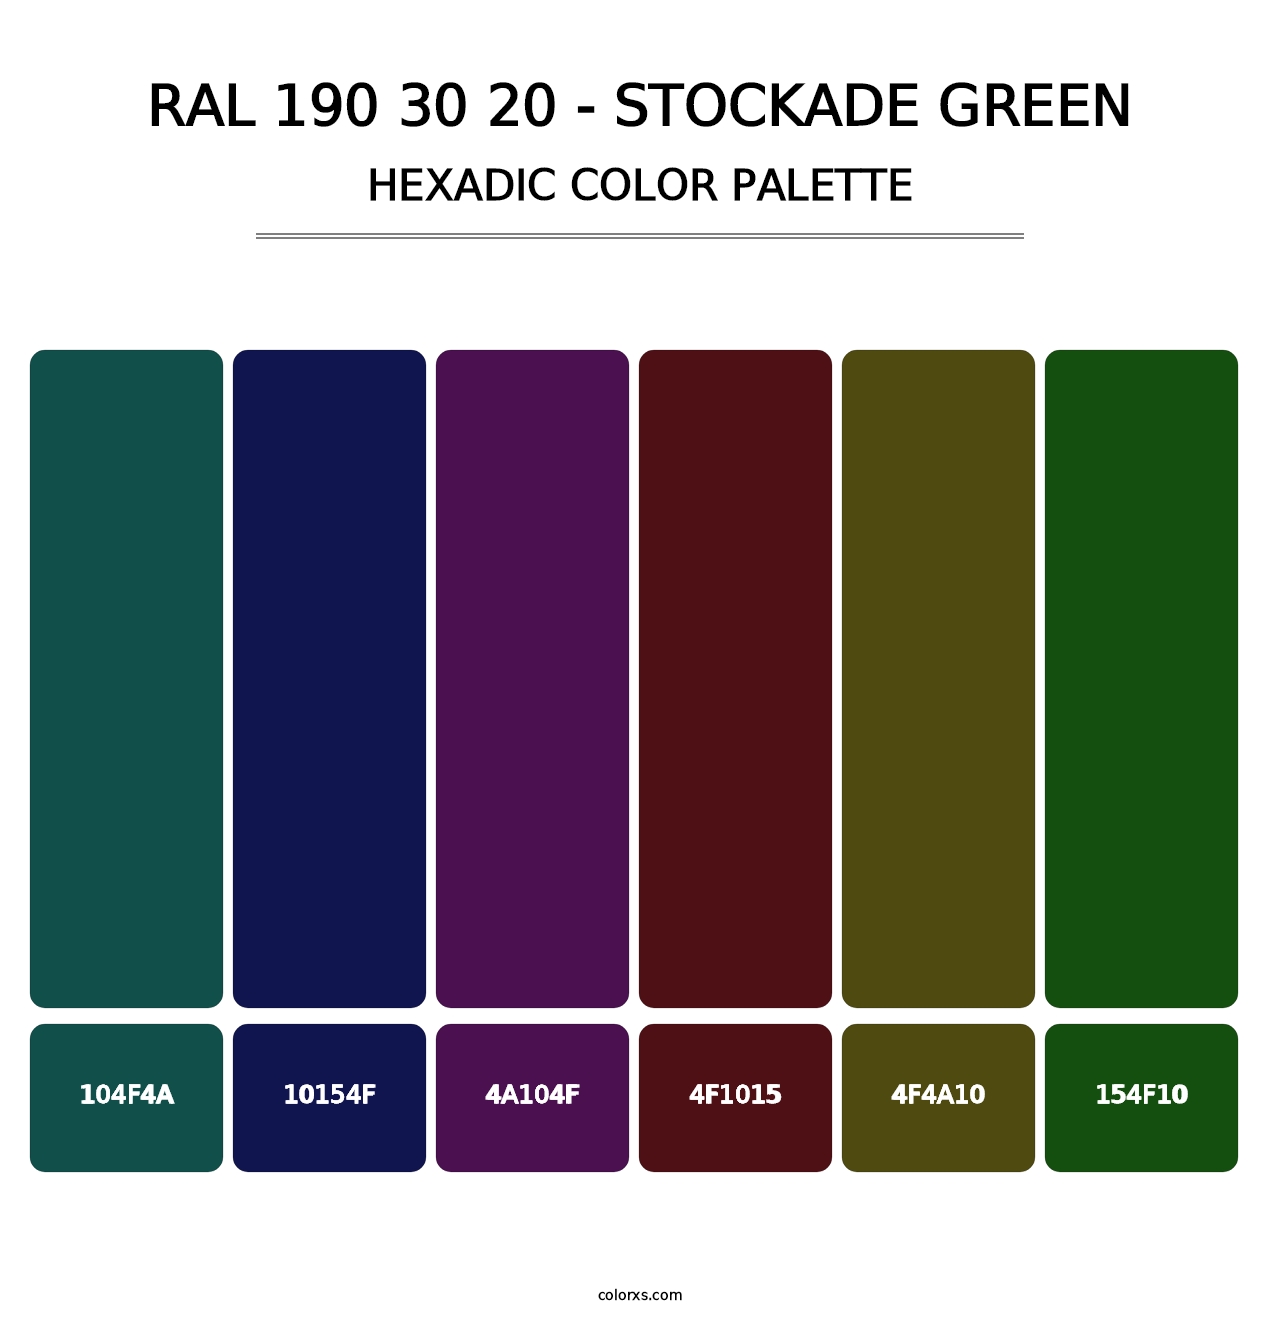 RAL 190 30 20 - Stockade Green - Hexadic Color Palette